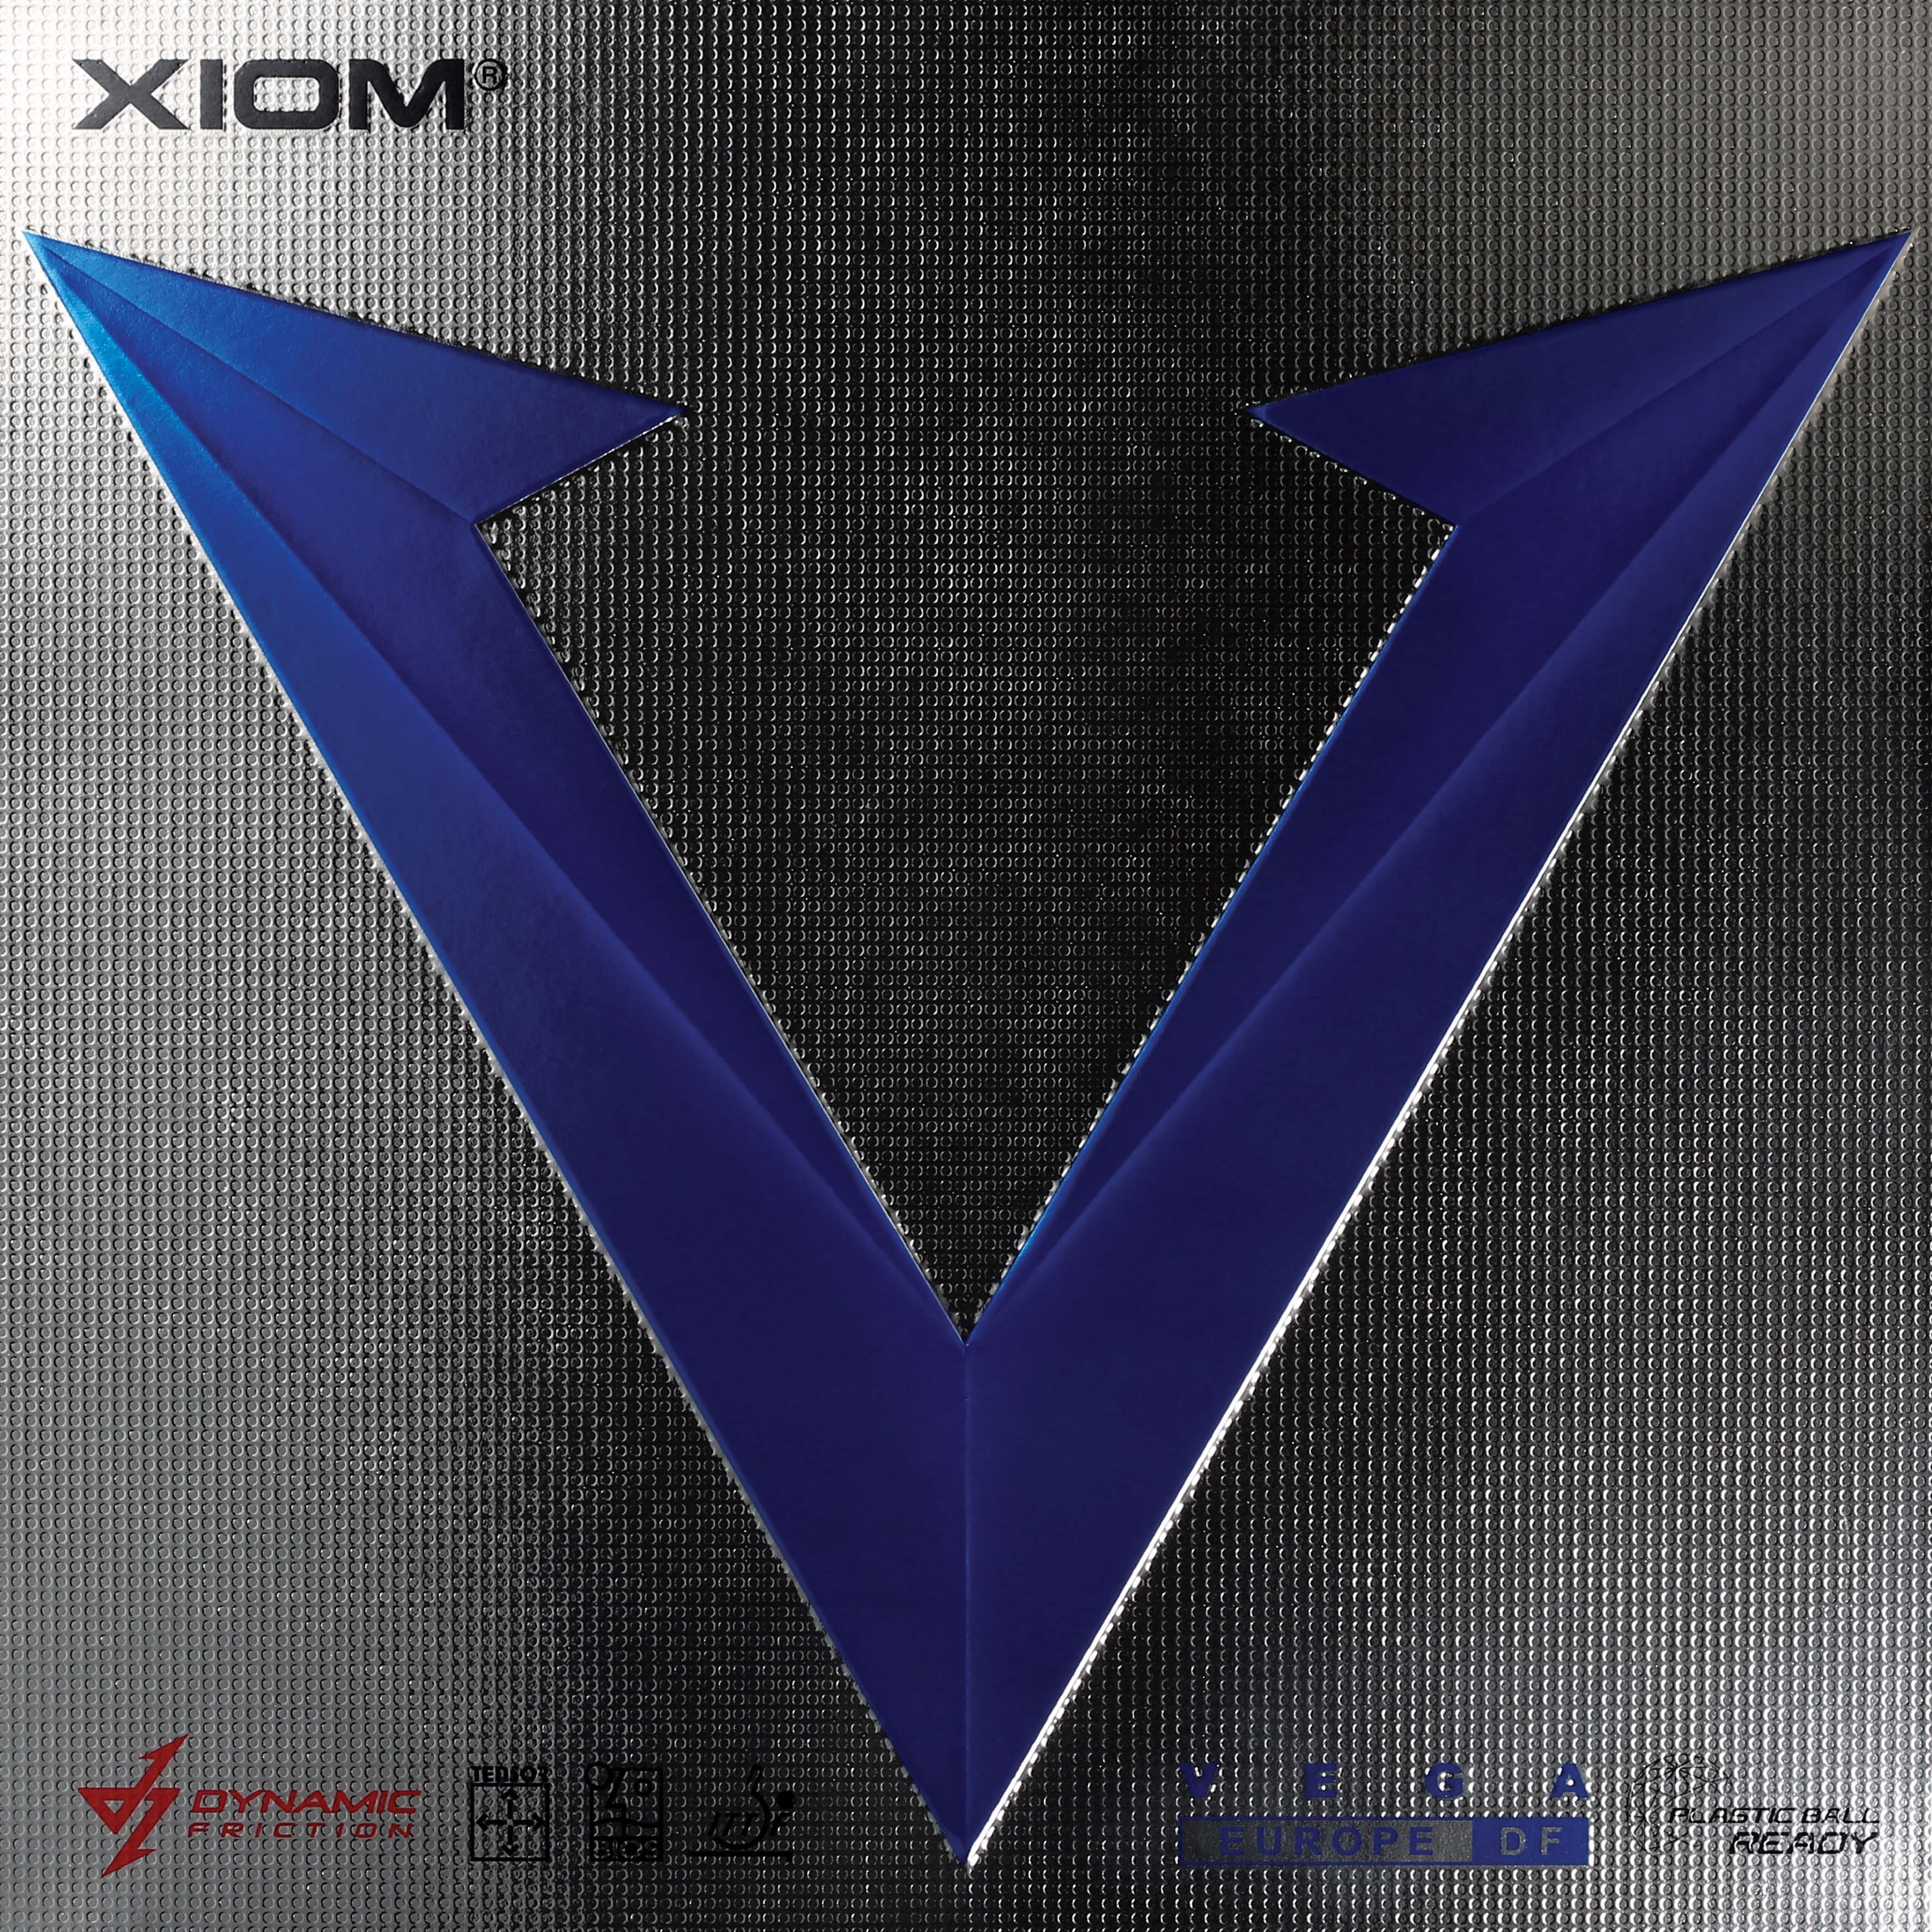 Xiom copre Vega Euro